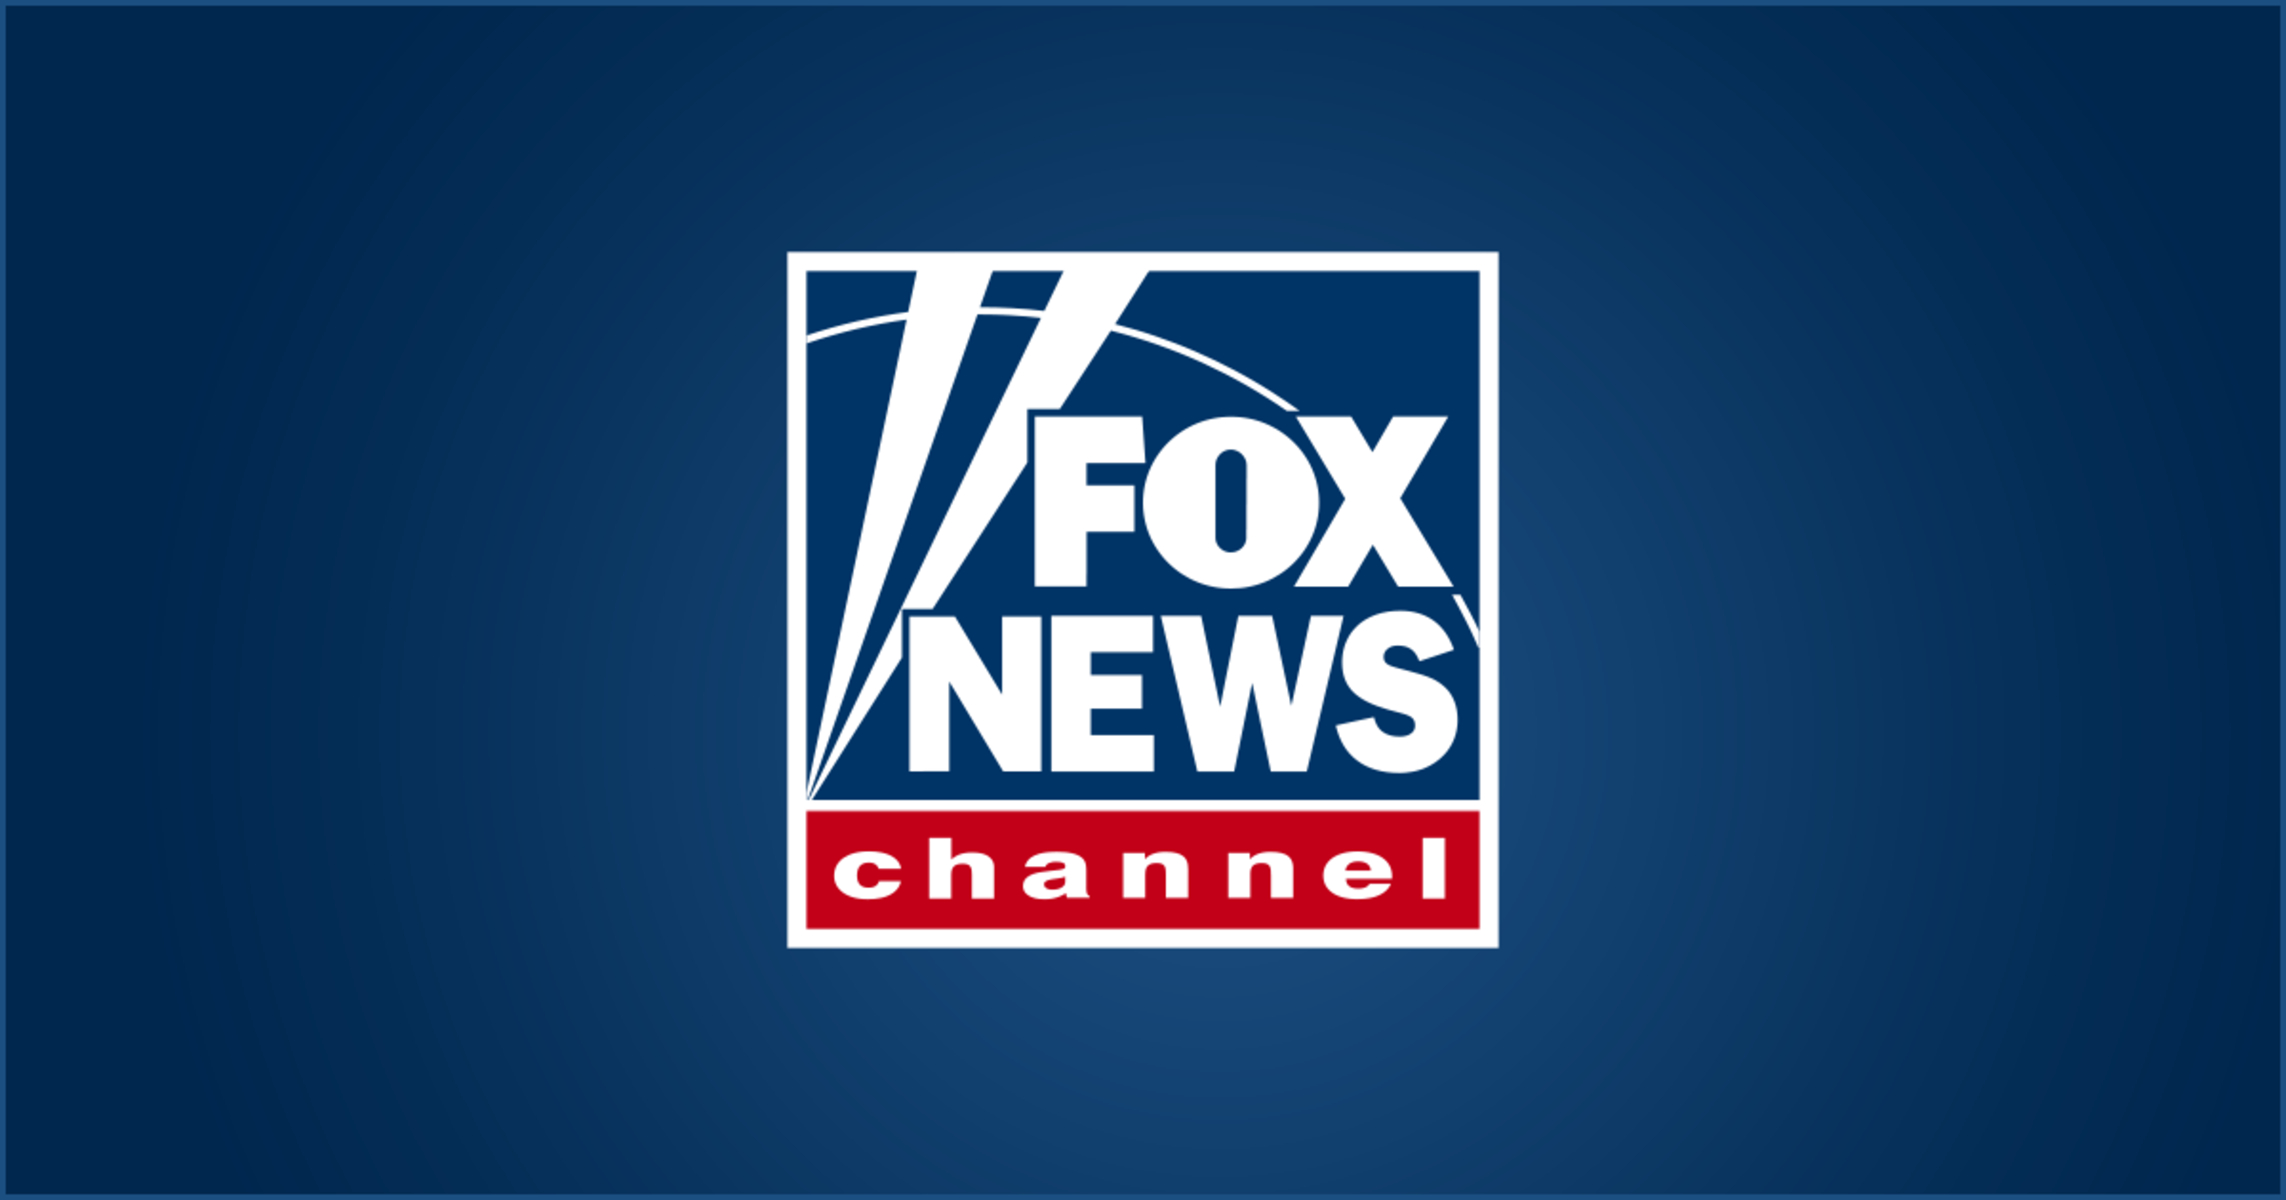 How To Watch Fox News